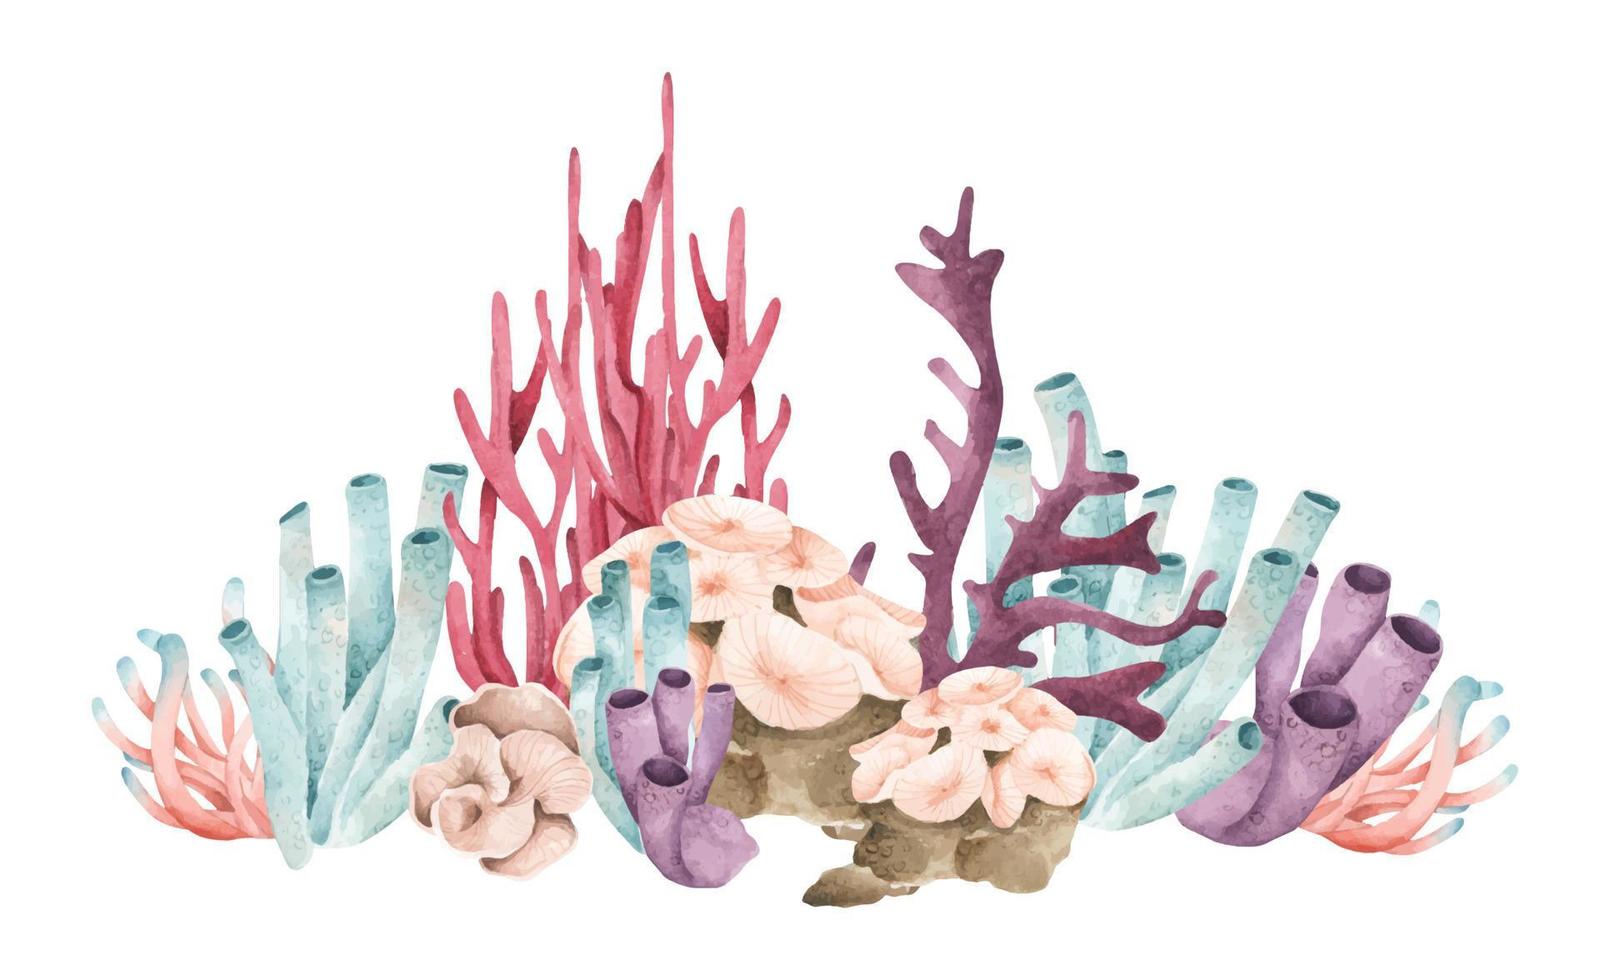 Seaweeds. Underwater ocean plants, sea coral elements. Watercolor illustration. vector